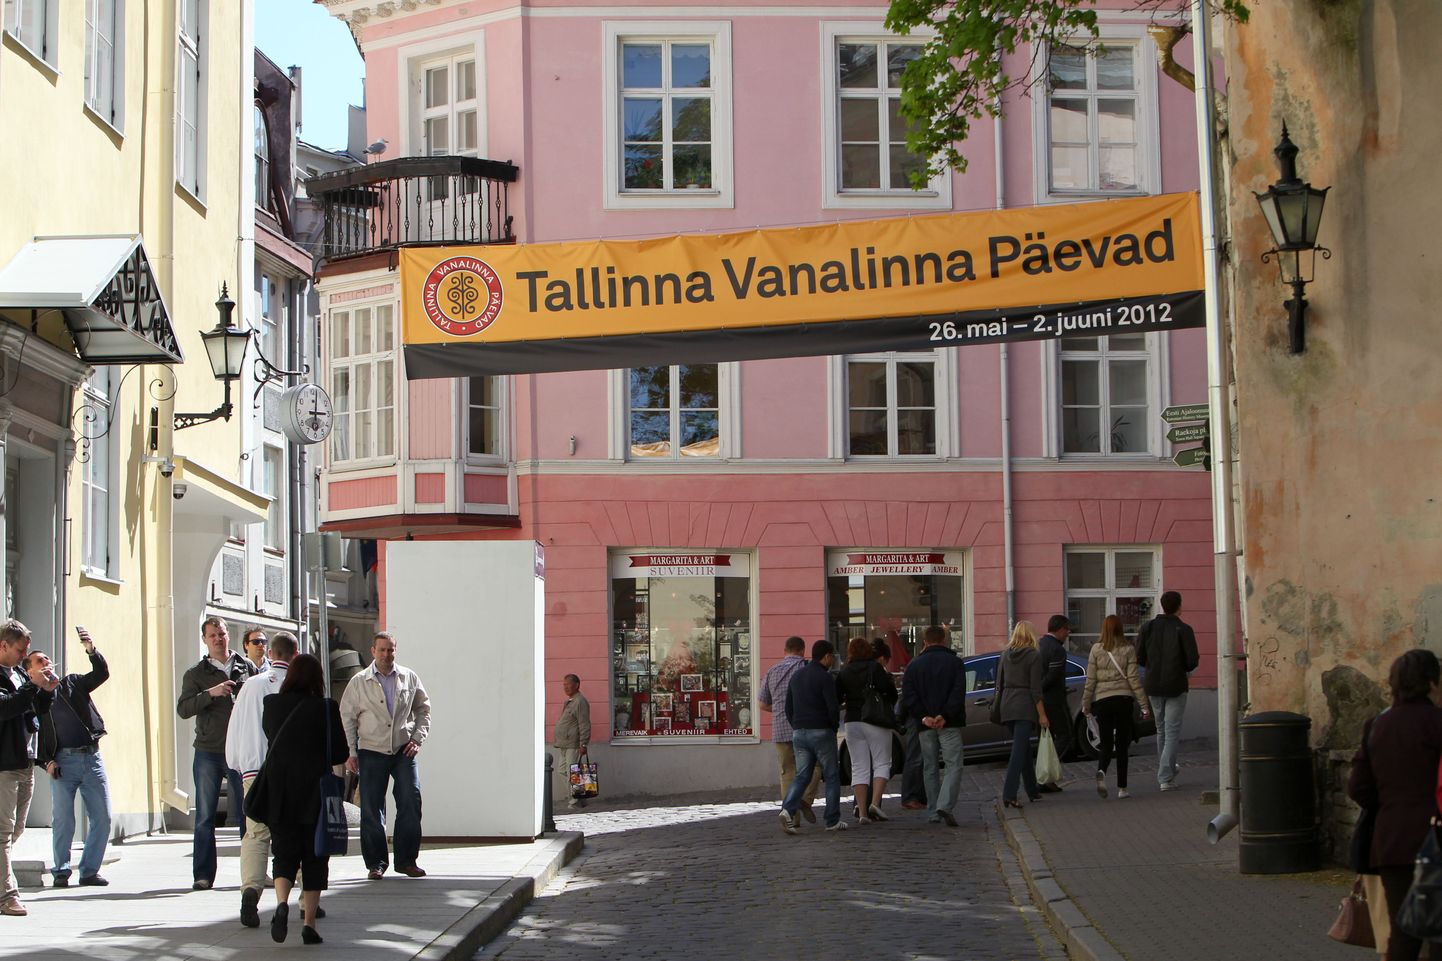 Tallinna Vanalinna Päevad